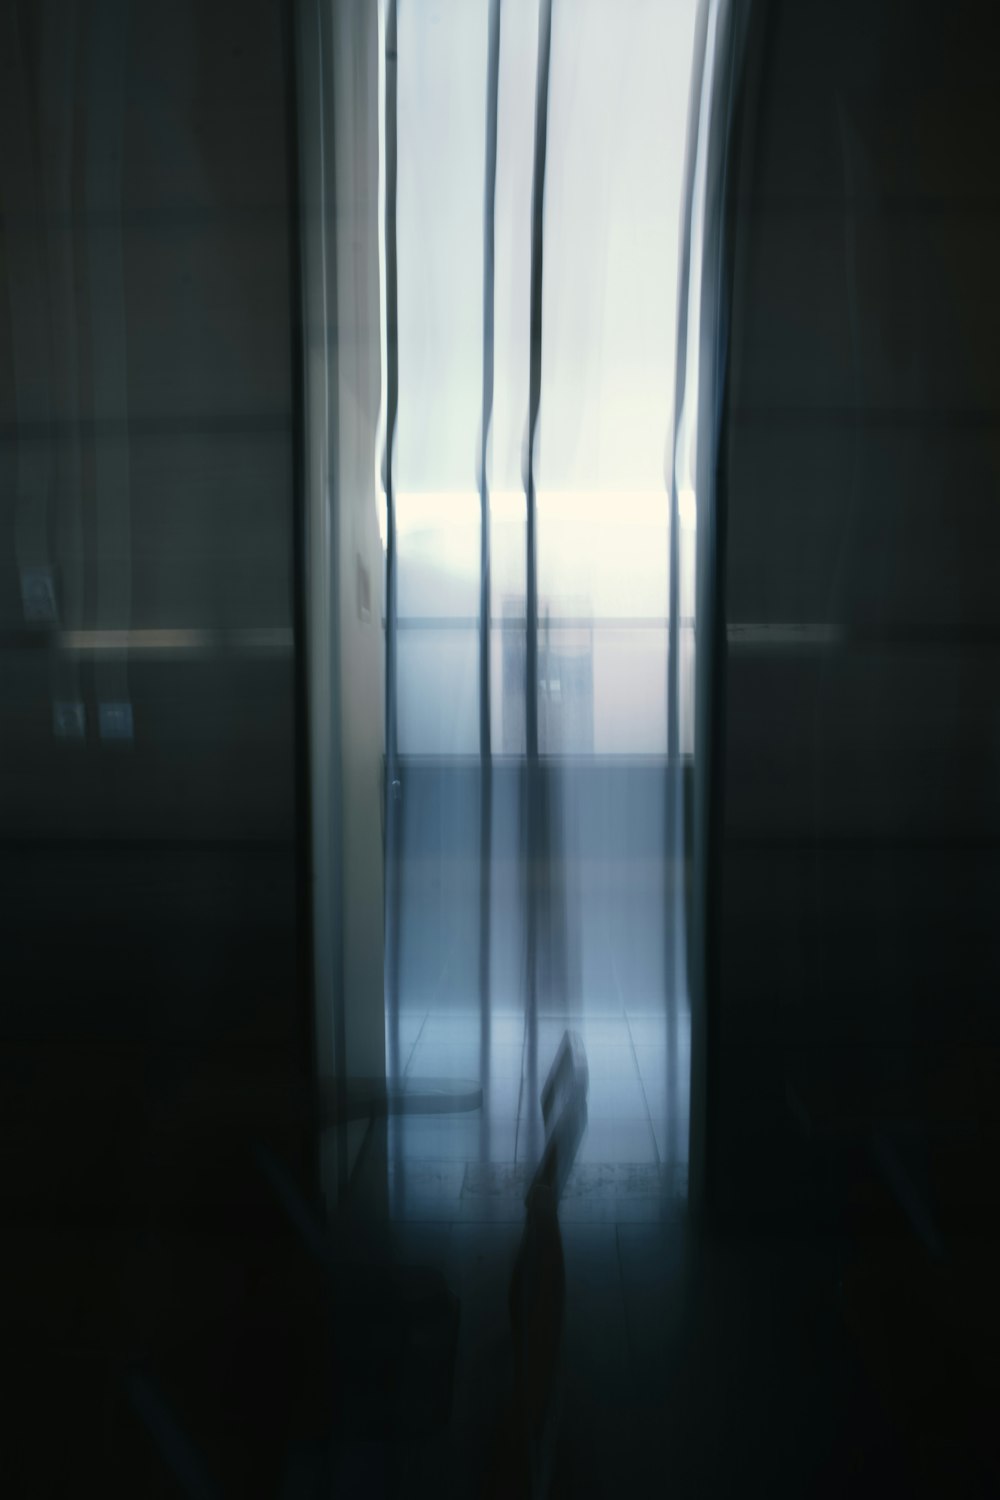 a blurry photo of a person walking through an open door